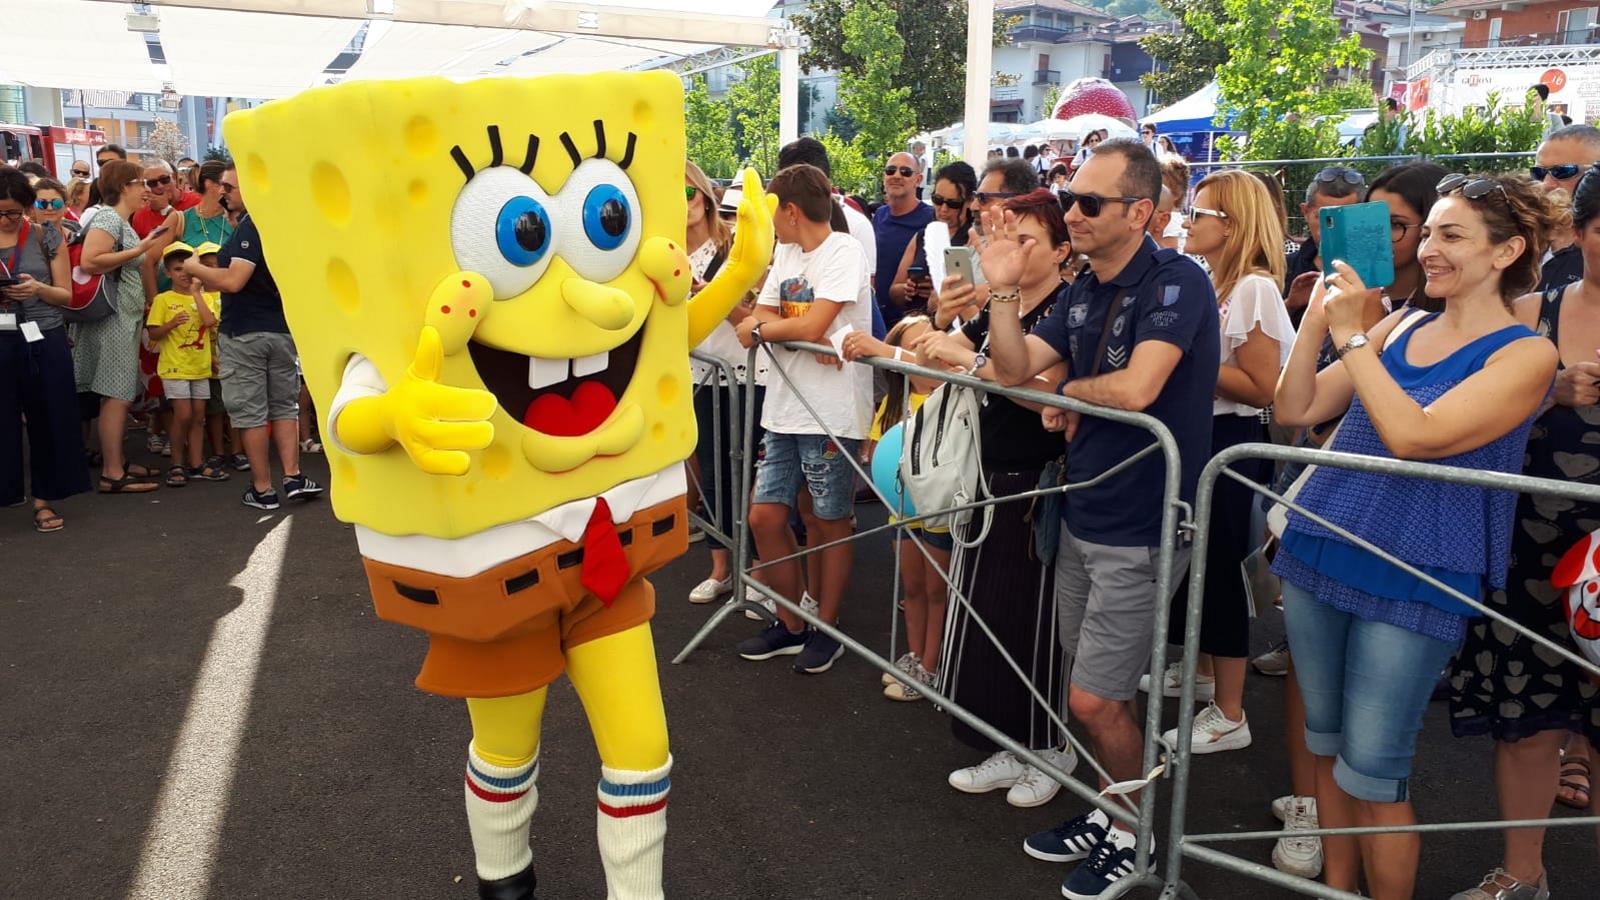 SpongeBob compie 20 anni, Nickelodeon festeggia a Giffoni [credit: Ufficio Stampa Nickelodeon]